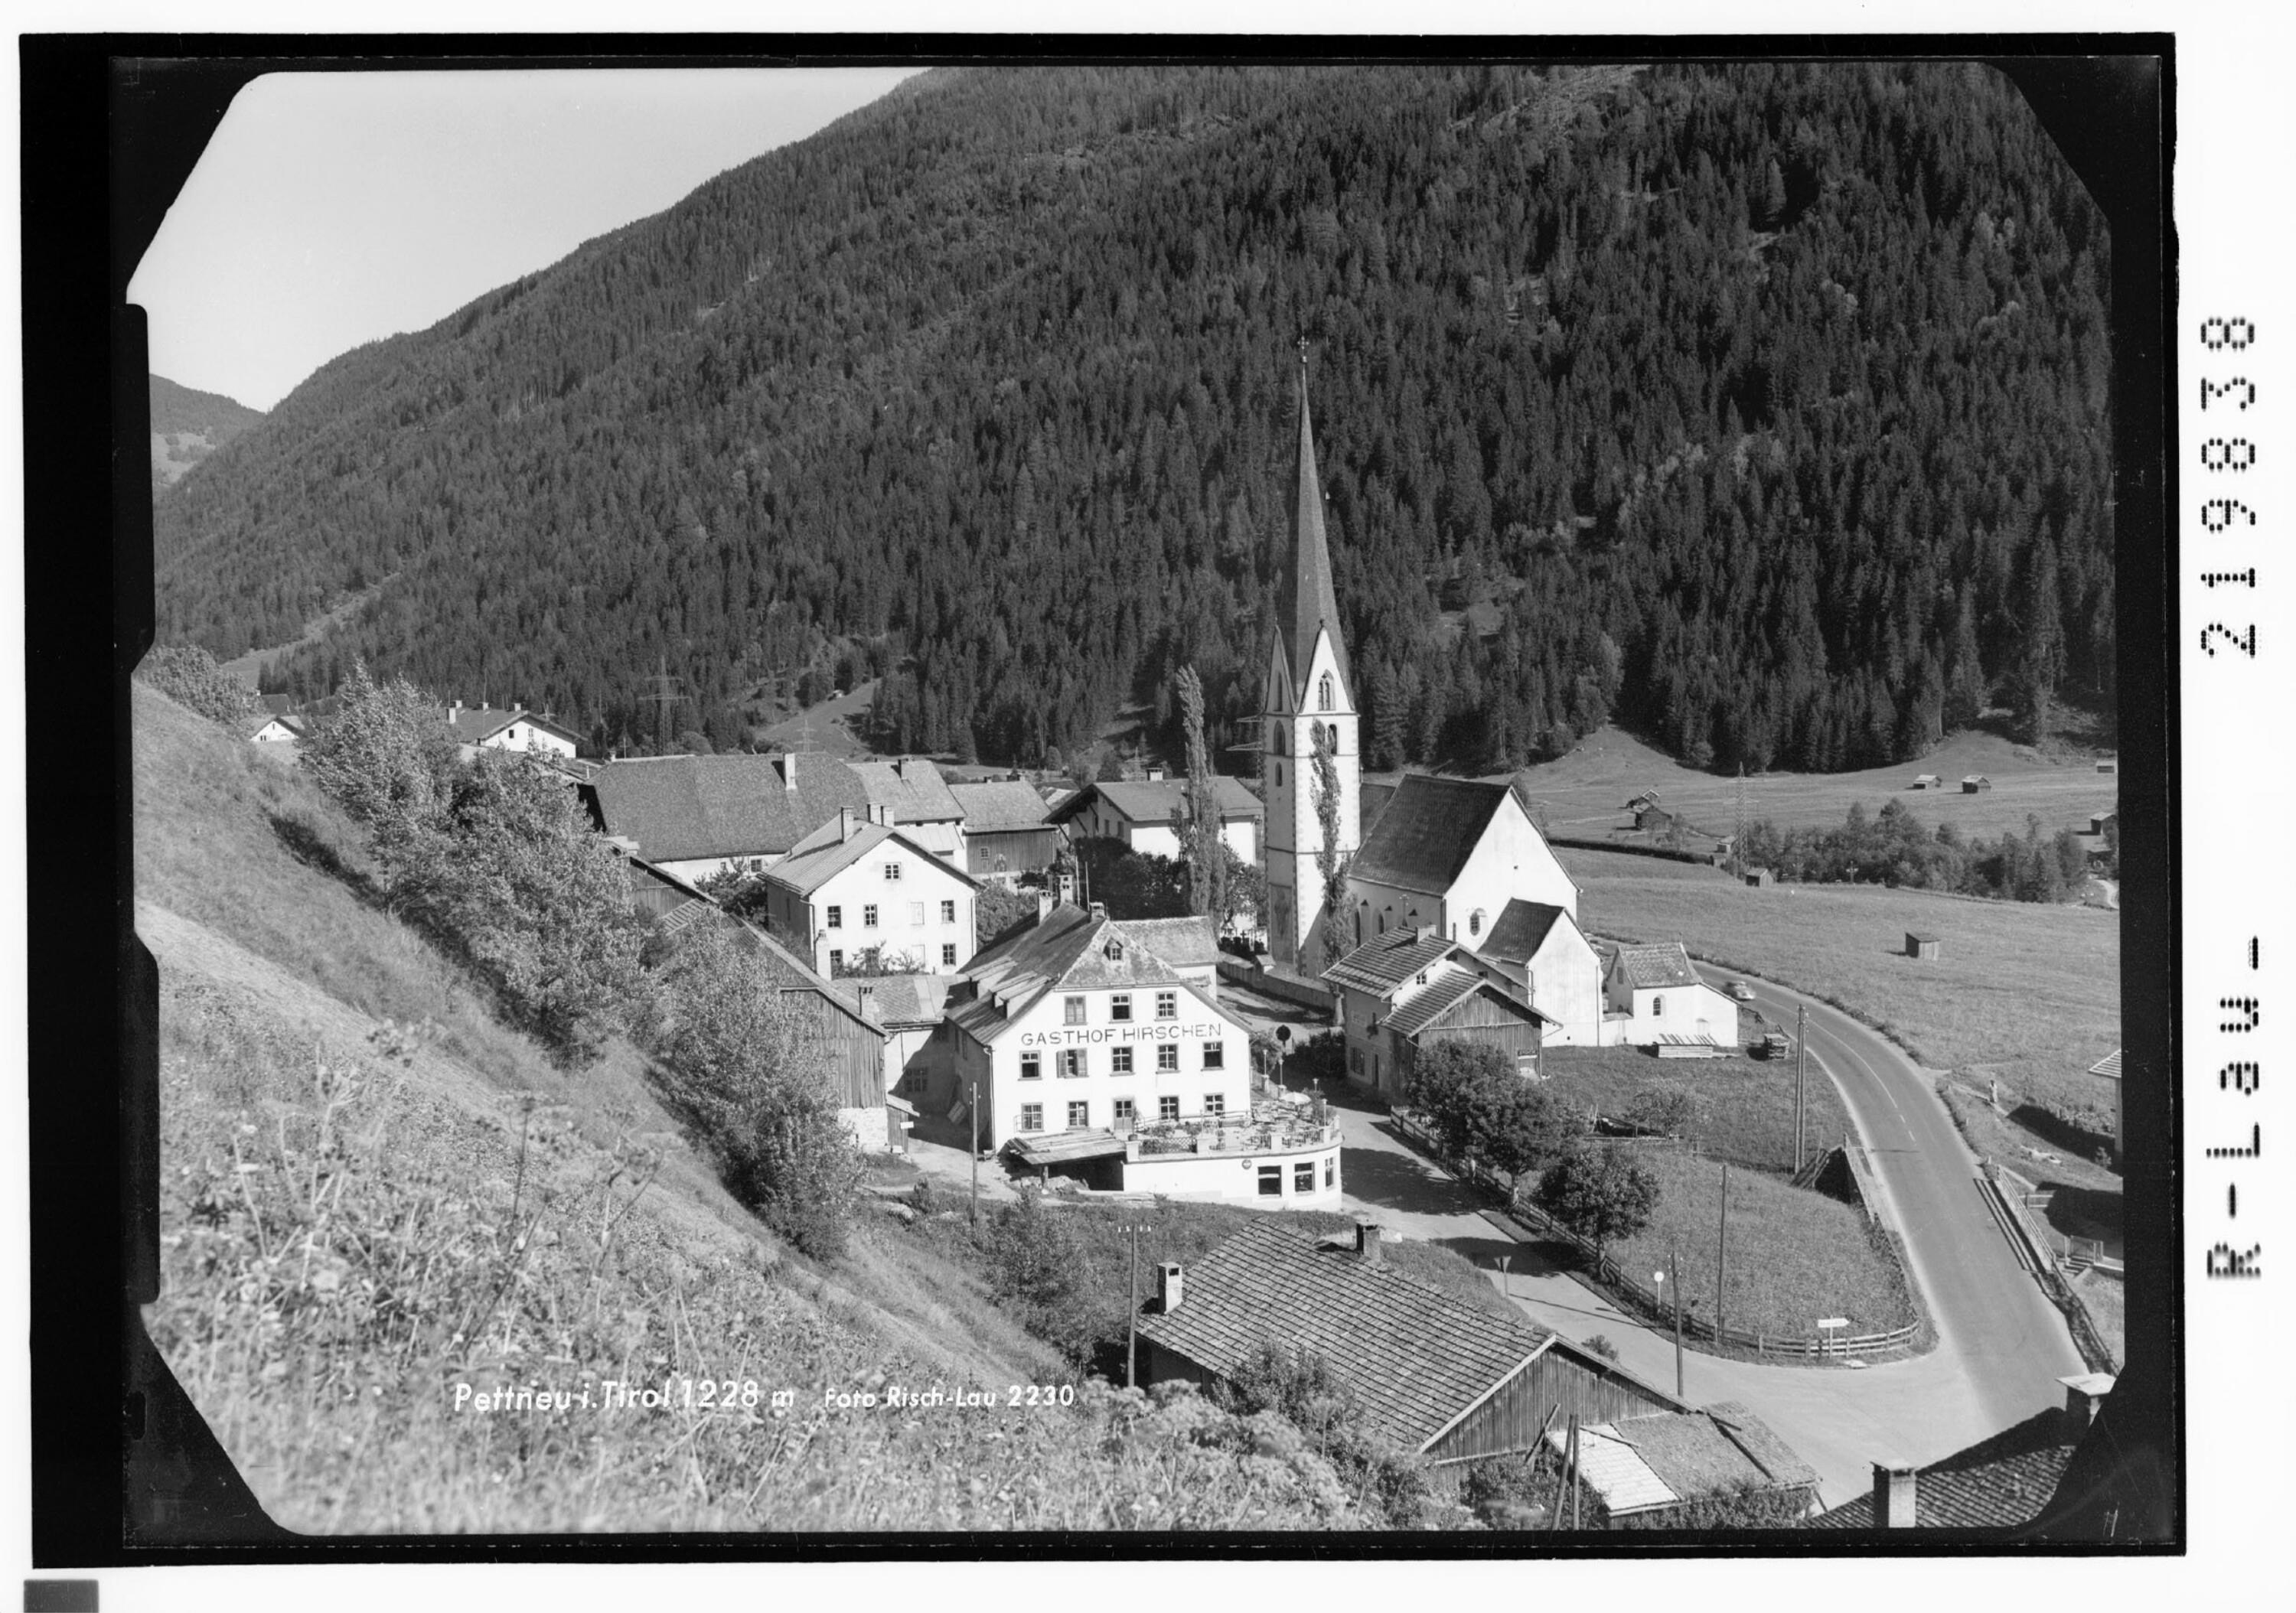 Pettneu in Tirol 1228 m></div>


    <hr>
    <div class=